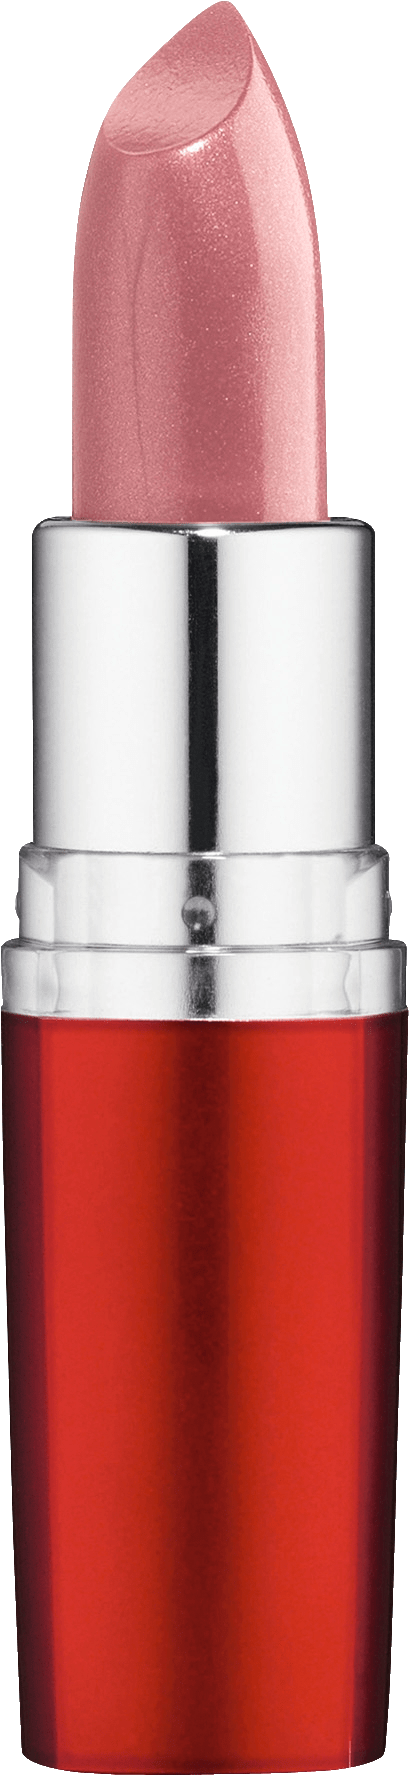 Maybelline Lippenstift Moisture Extreme Lipstick Metallic Mauve 54/132, 5 G